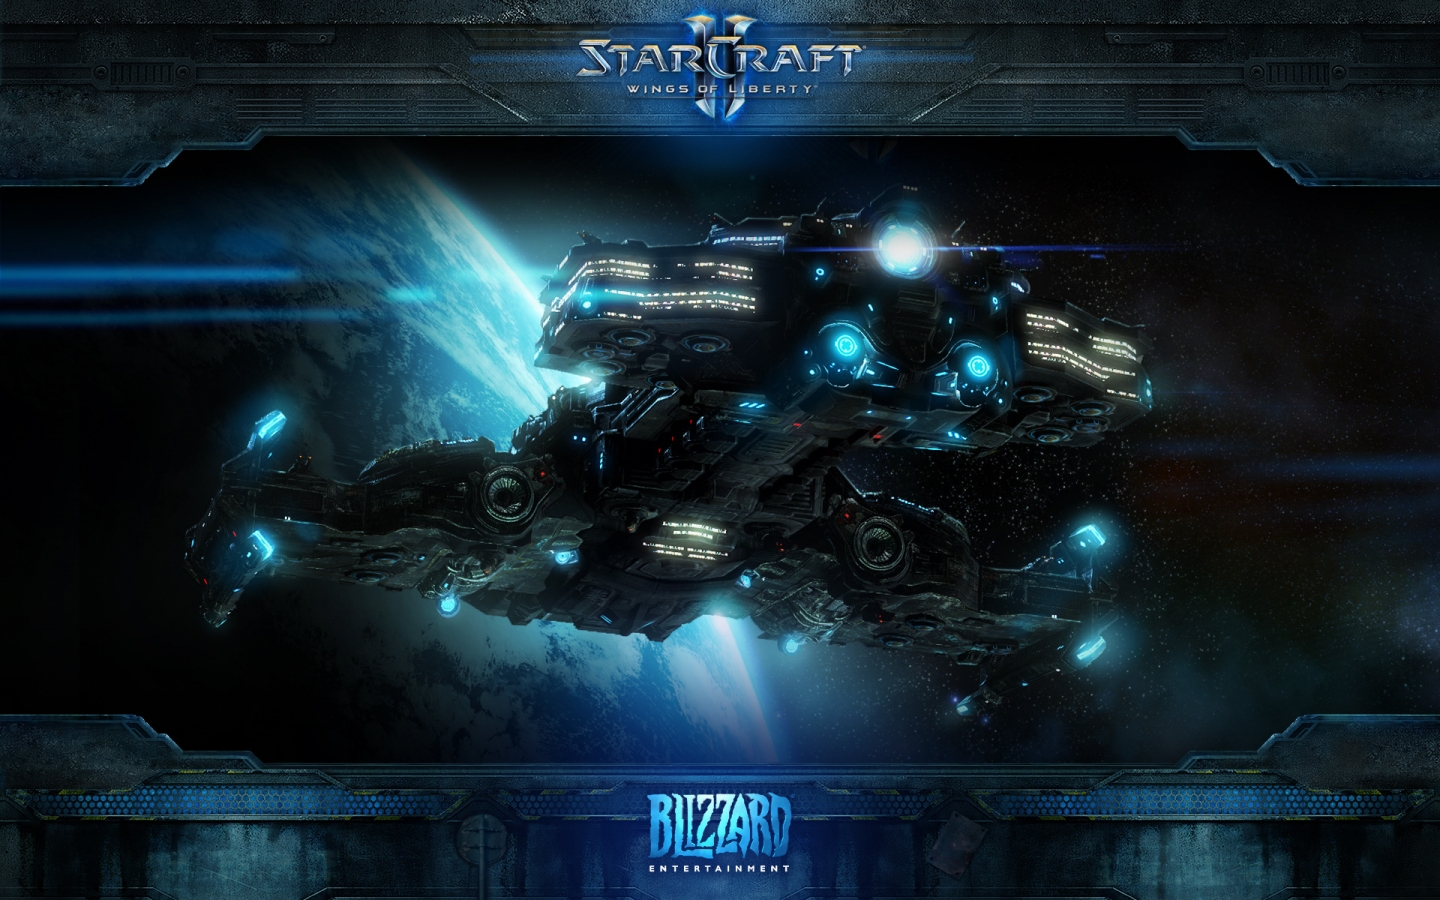 Starcraft 2 Ship for 1440 x 900 widescreen resolution